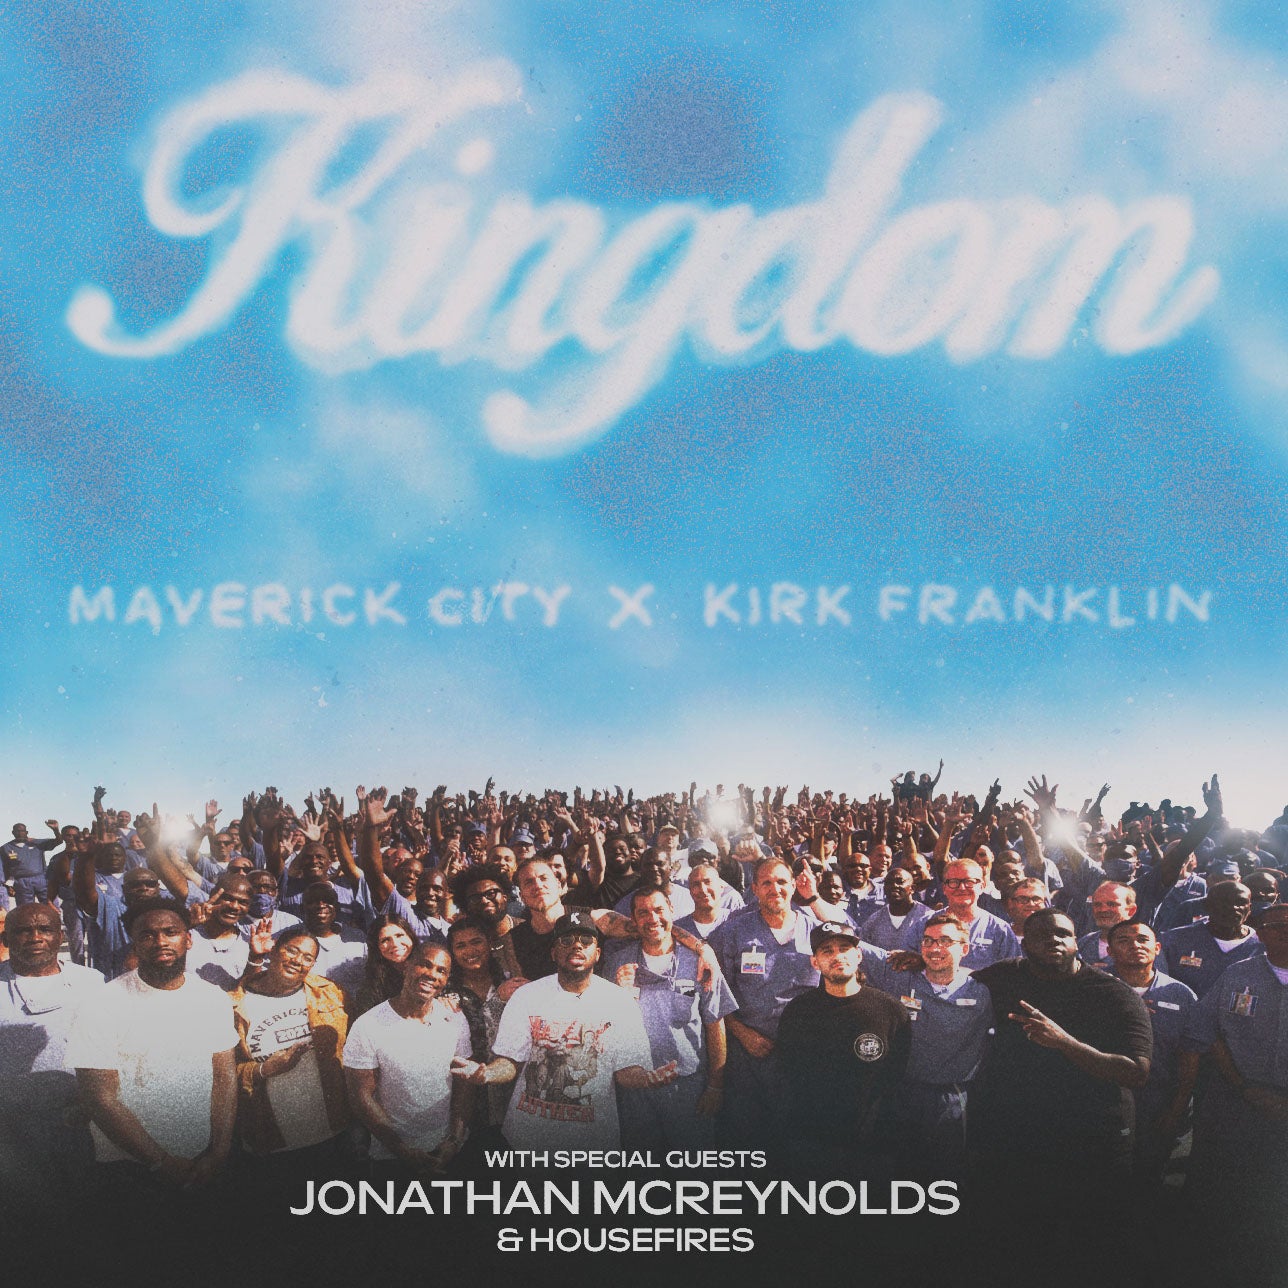 Maverick City Music x Kirk Franklin